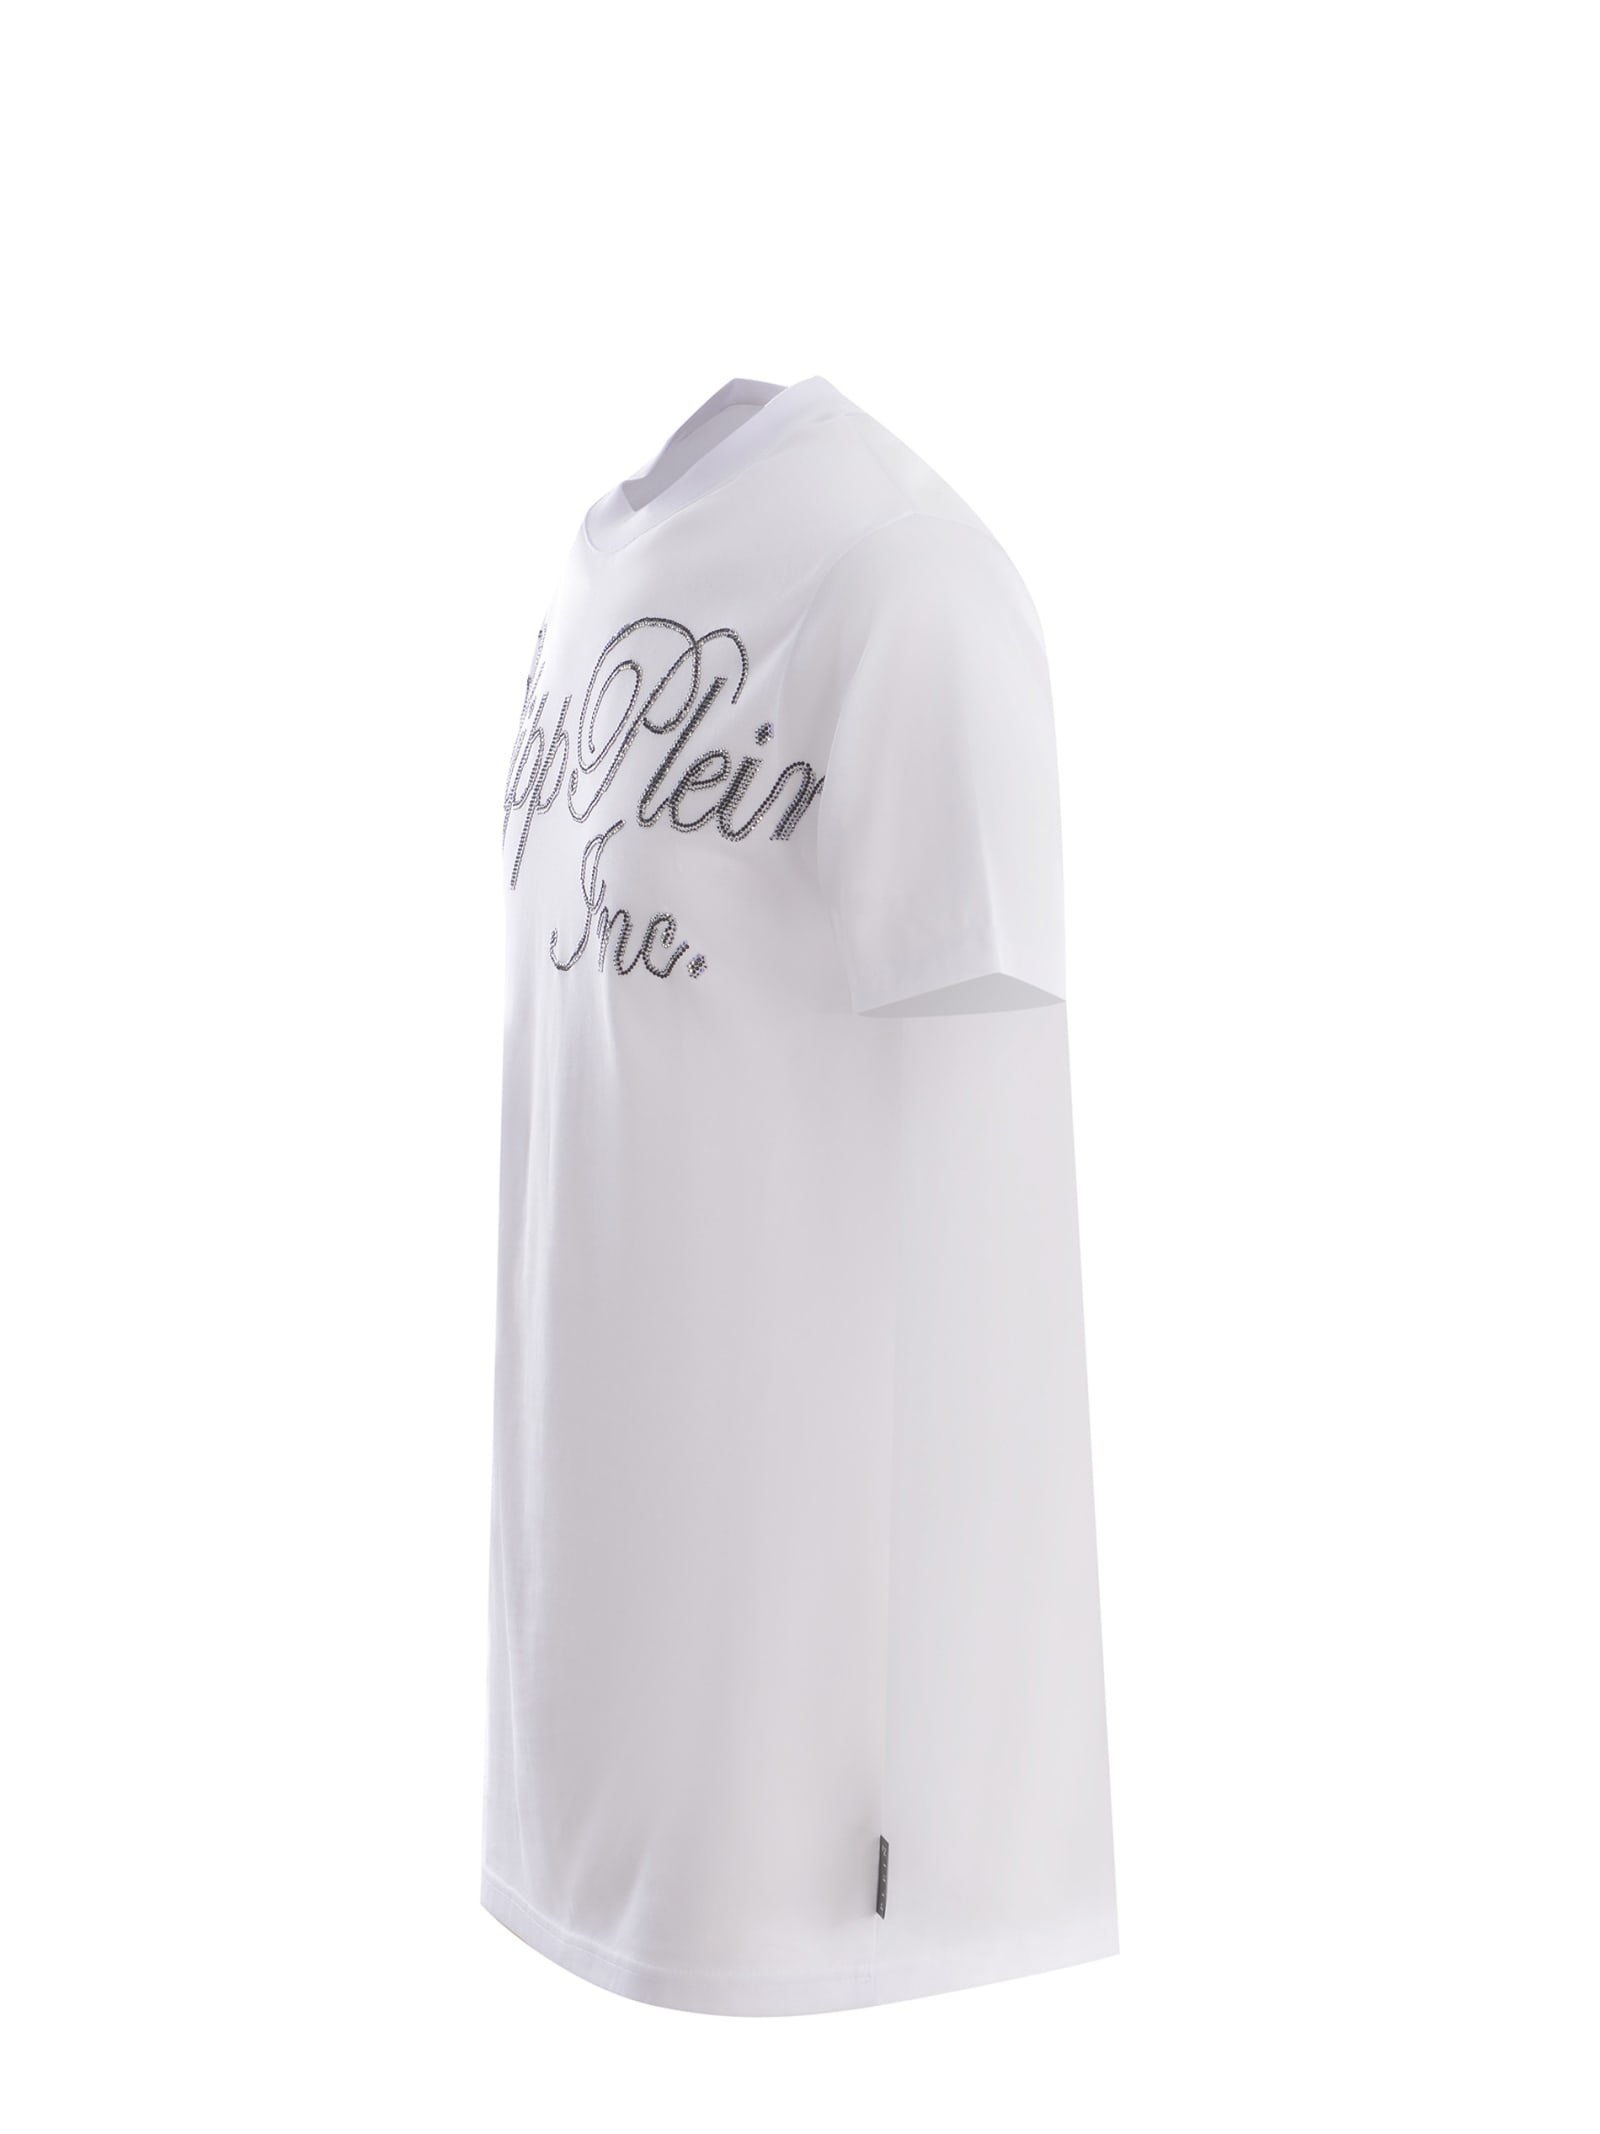 Shop Philipp Plein T-shirt  Made Of Cotton In White